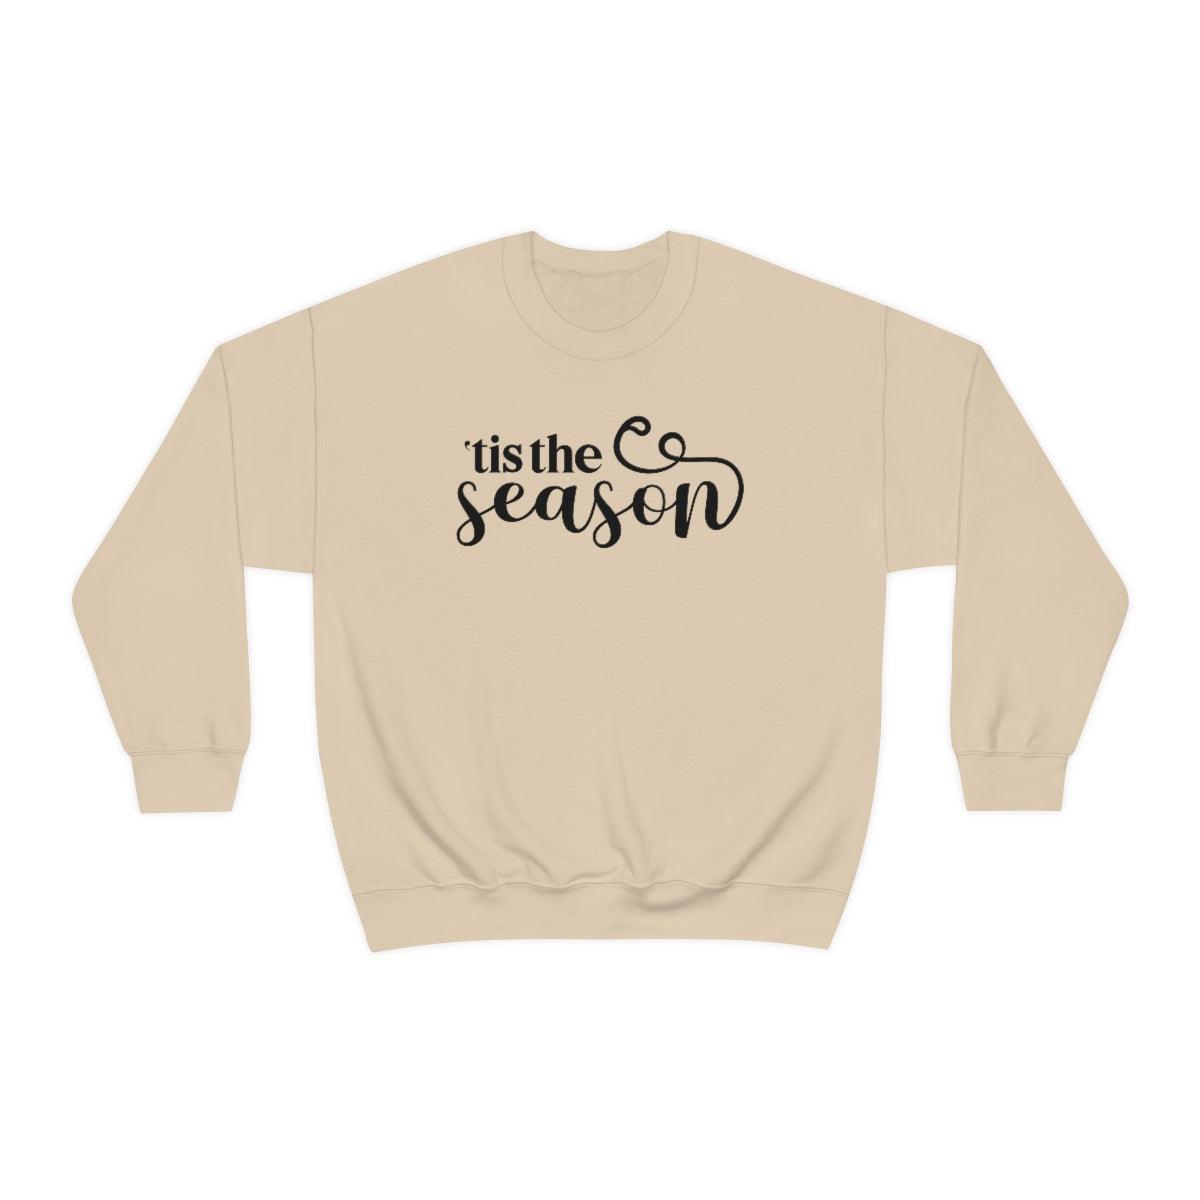 'tis the season Christmas Crewneck Sweater - Crystal Rose Design Co.